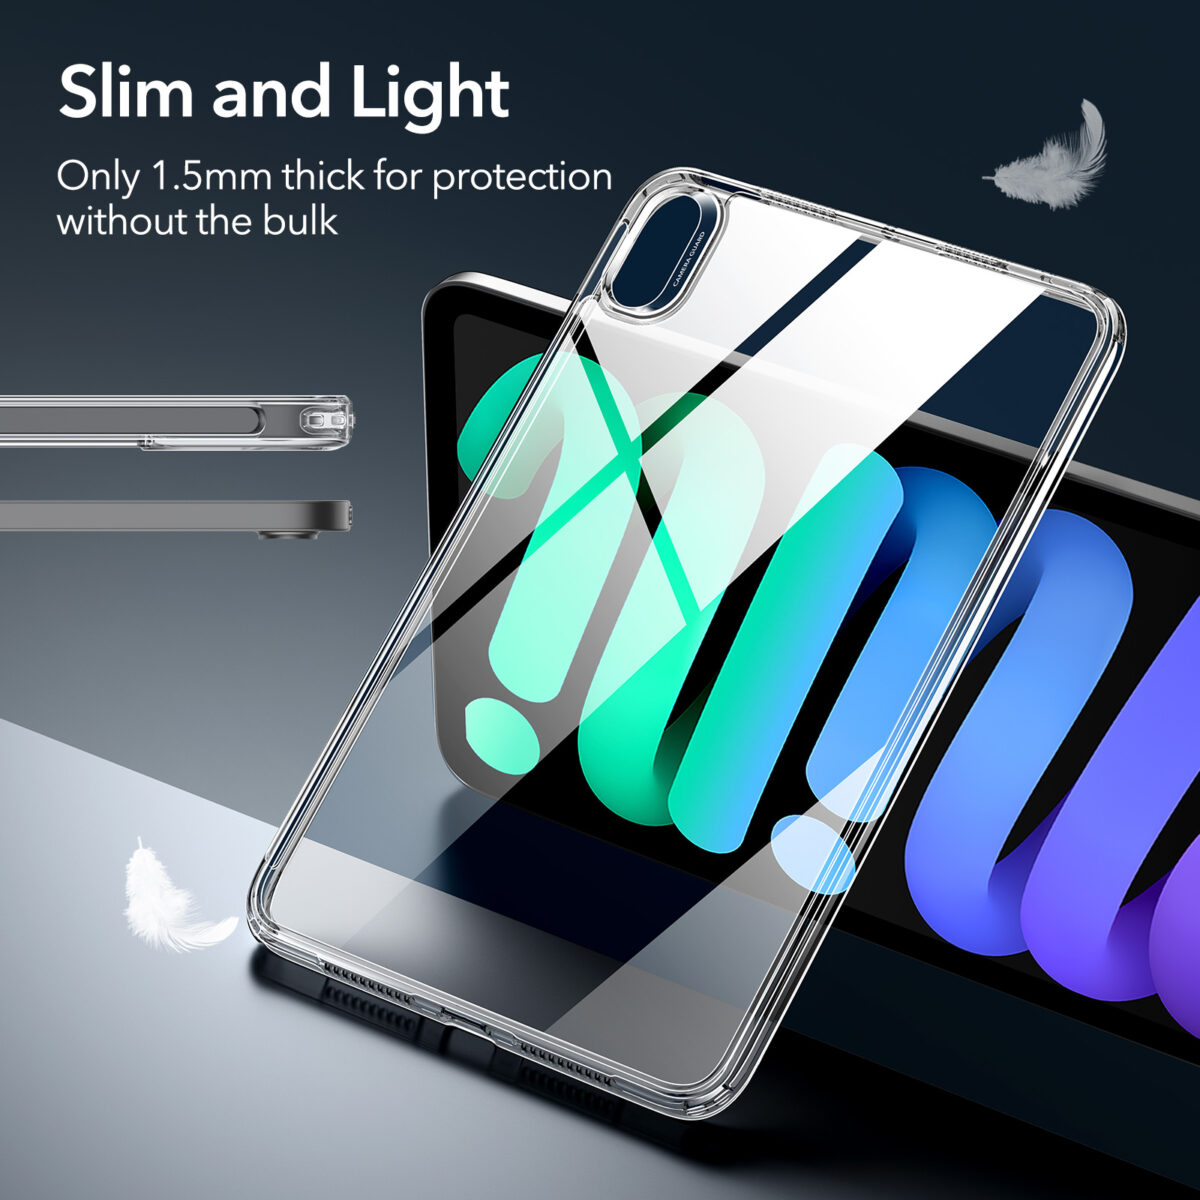 Slim and Light Case for iPad mini 6 2021 by ESR